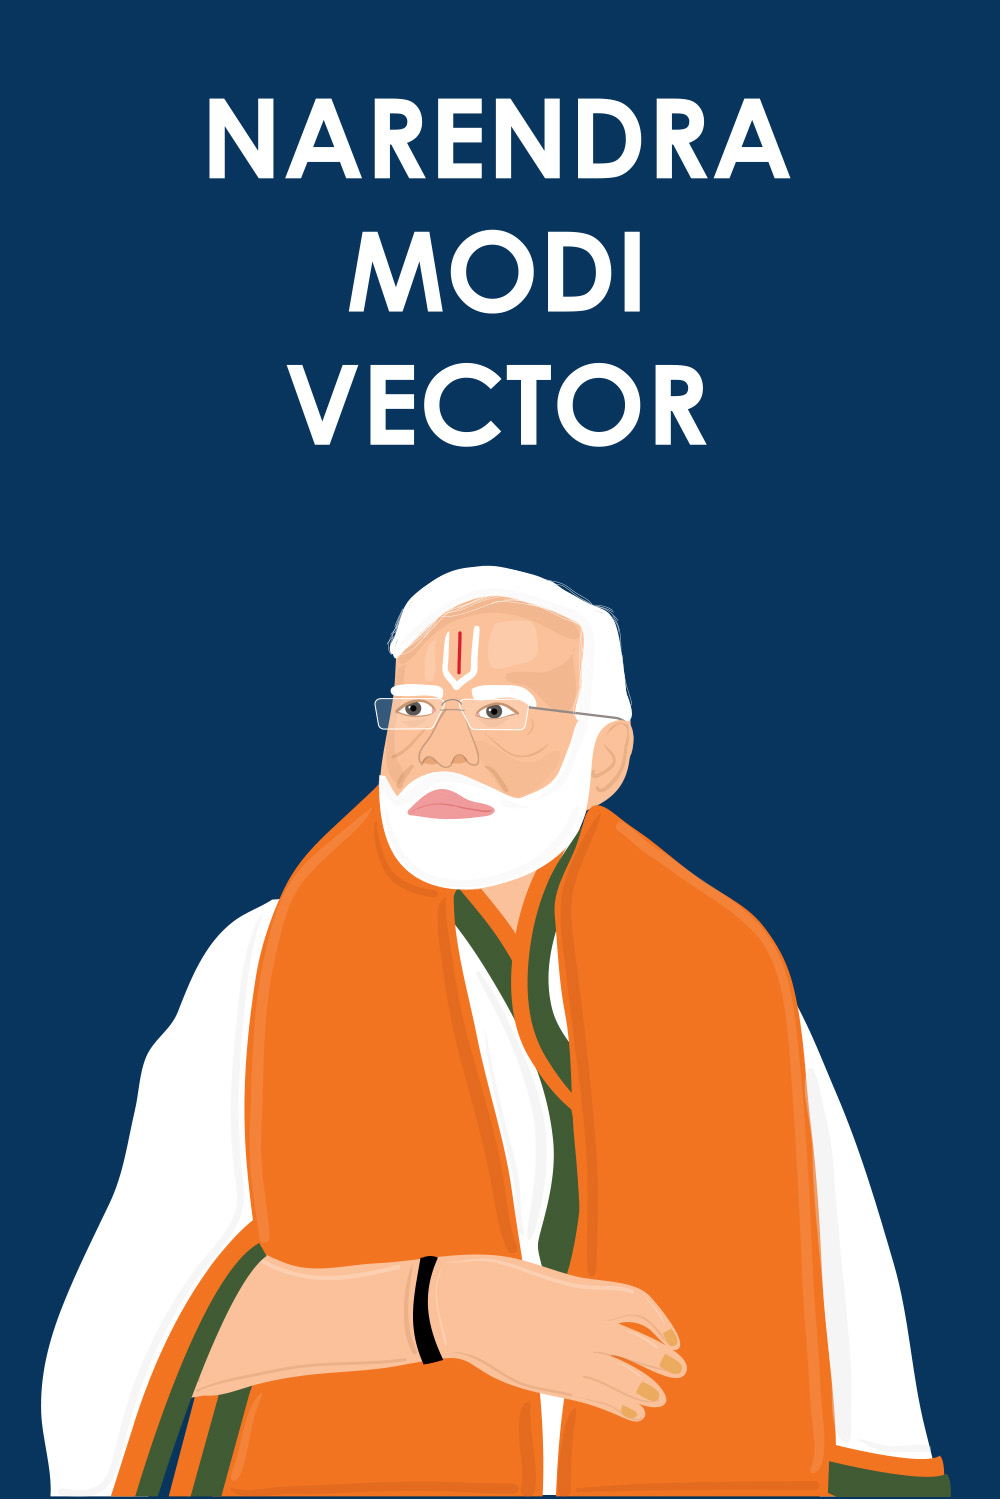 Prime Minister of India Shri Narendra Modi Vector pinterest preview image.